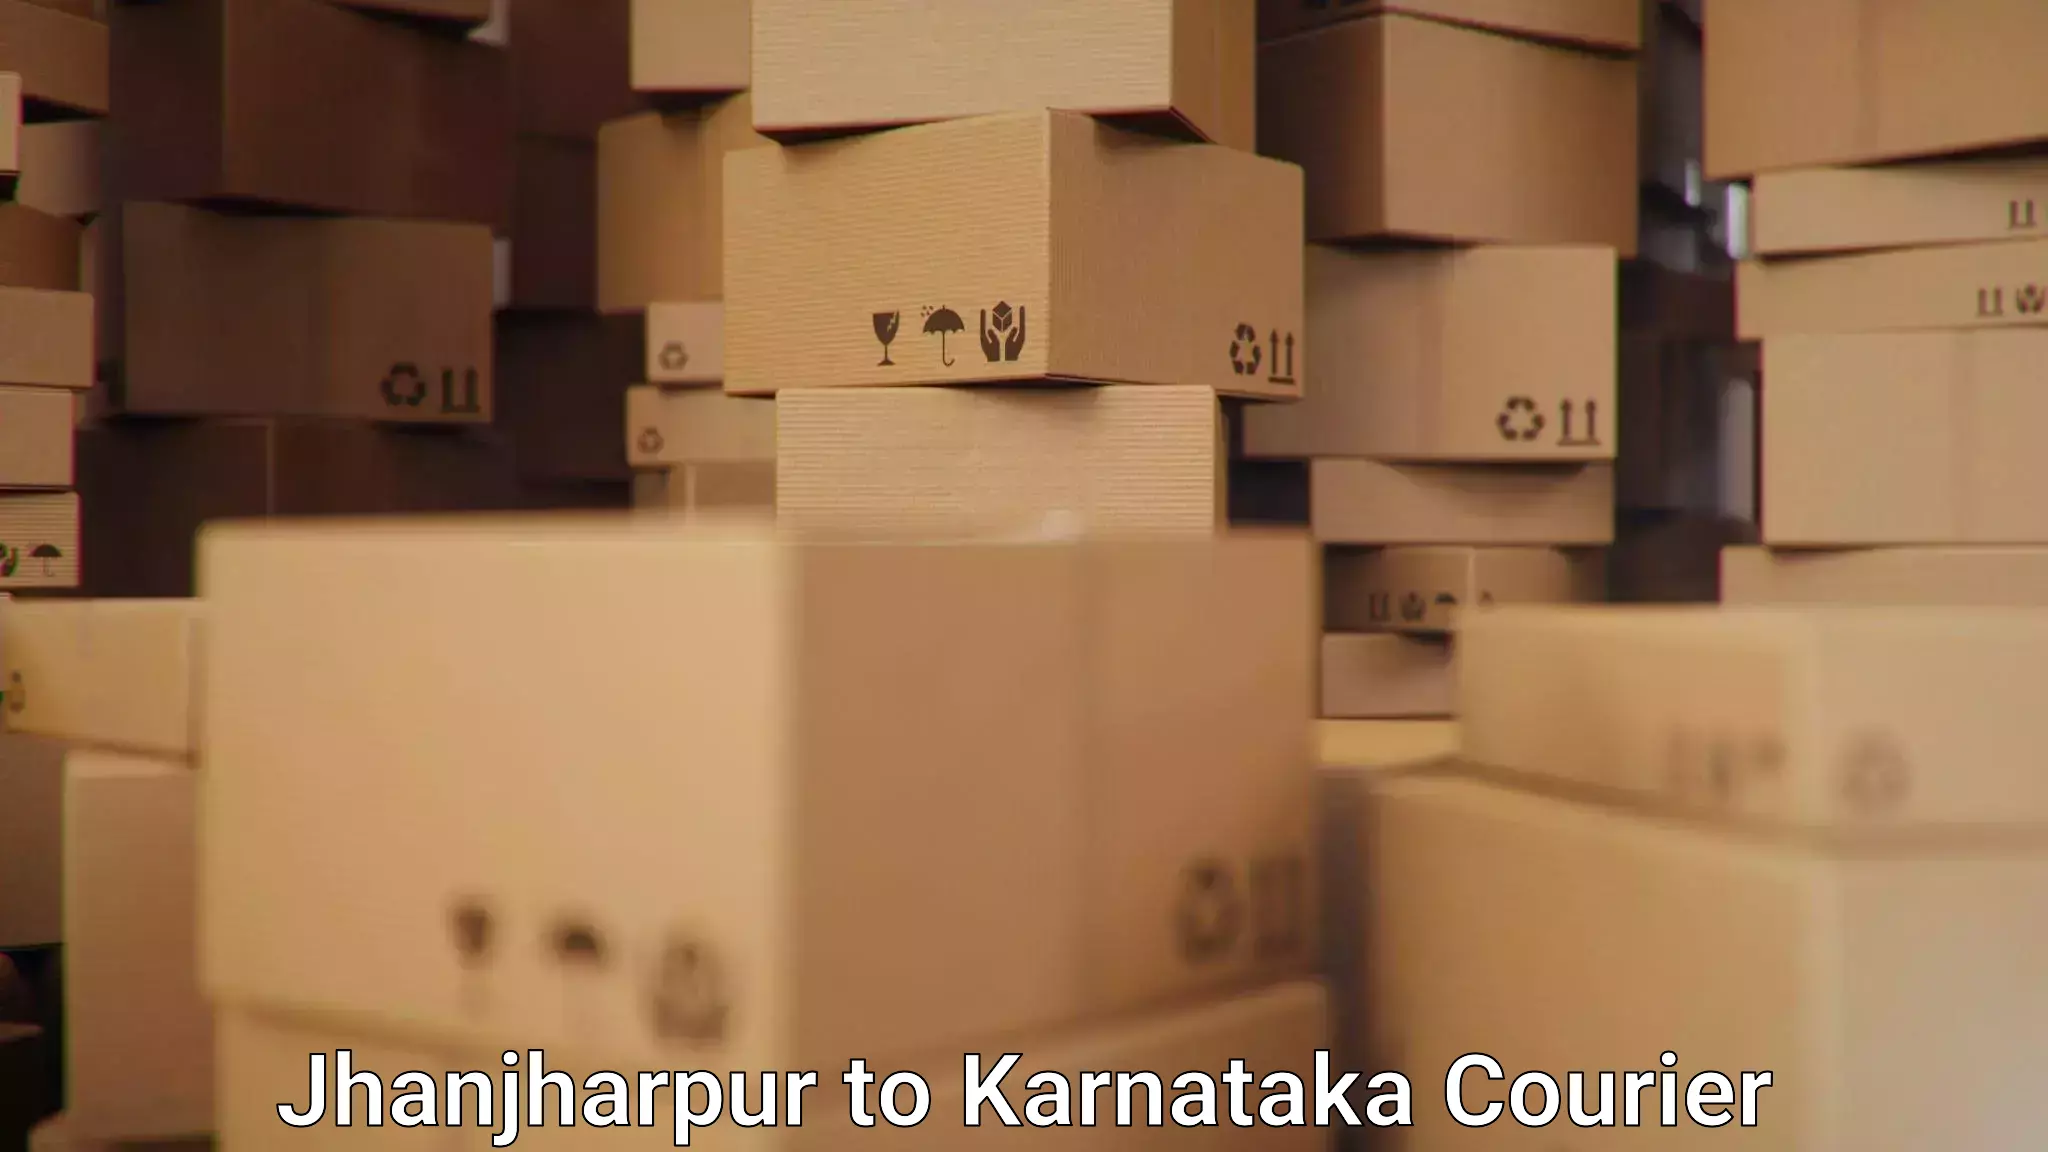 Reliable delivery network Jhanjharpur to Tavarekere